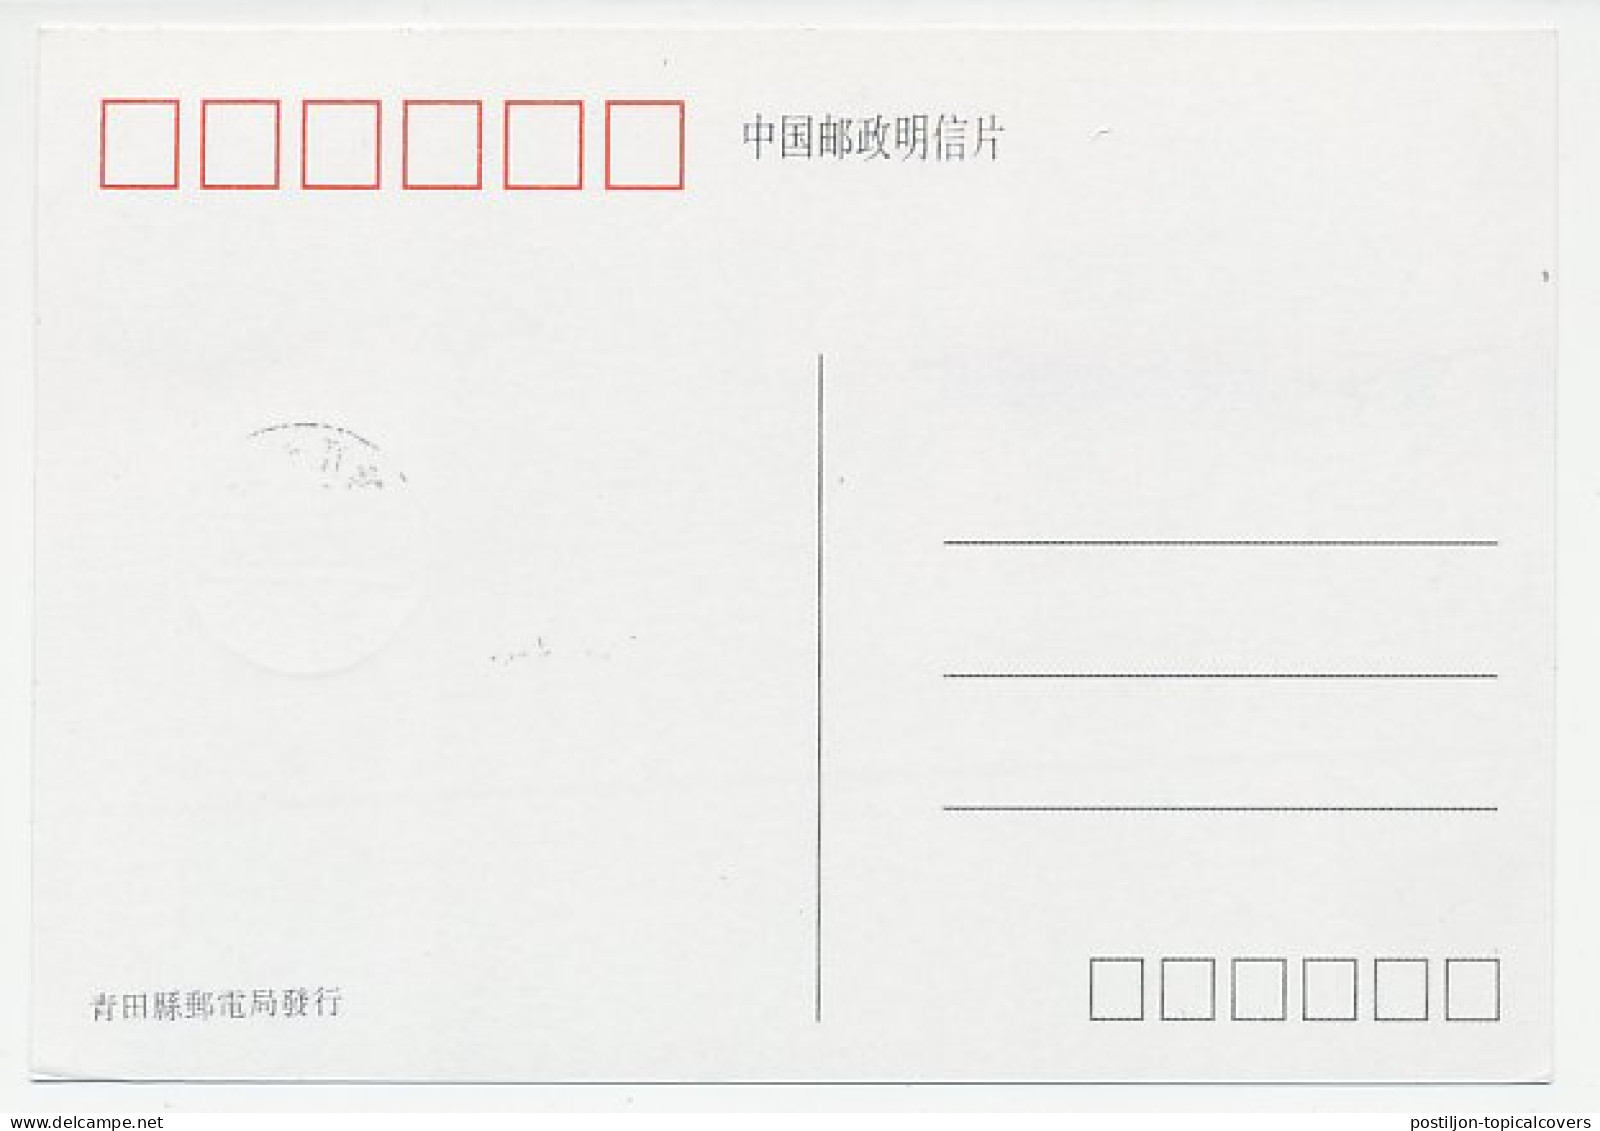 Maximum Card China 1992 Stone Carving - Beeldhouwkunst